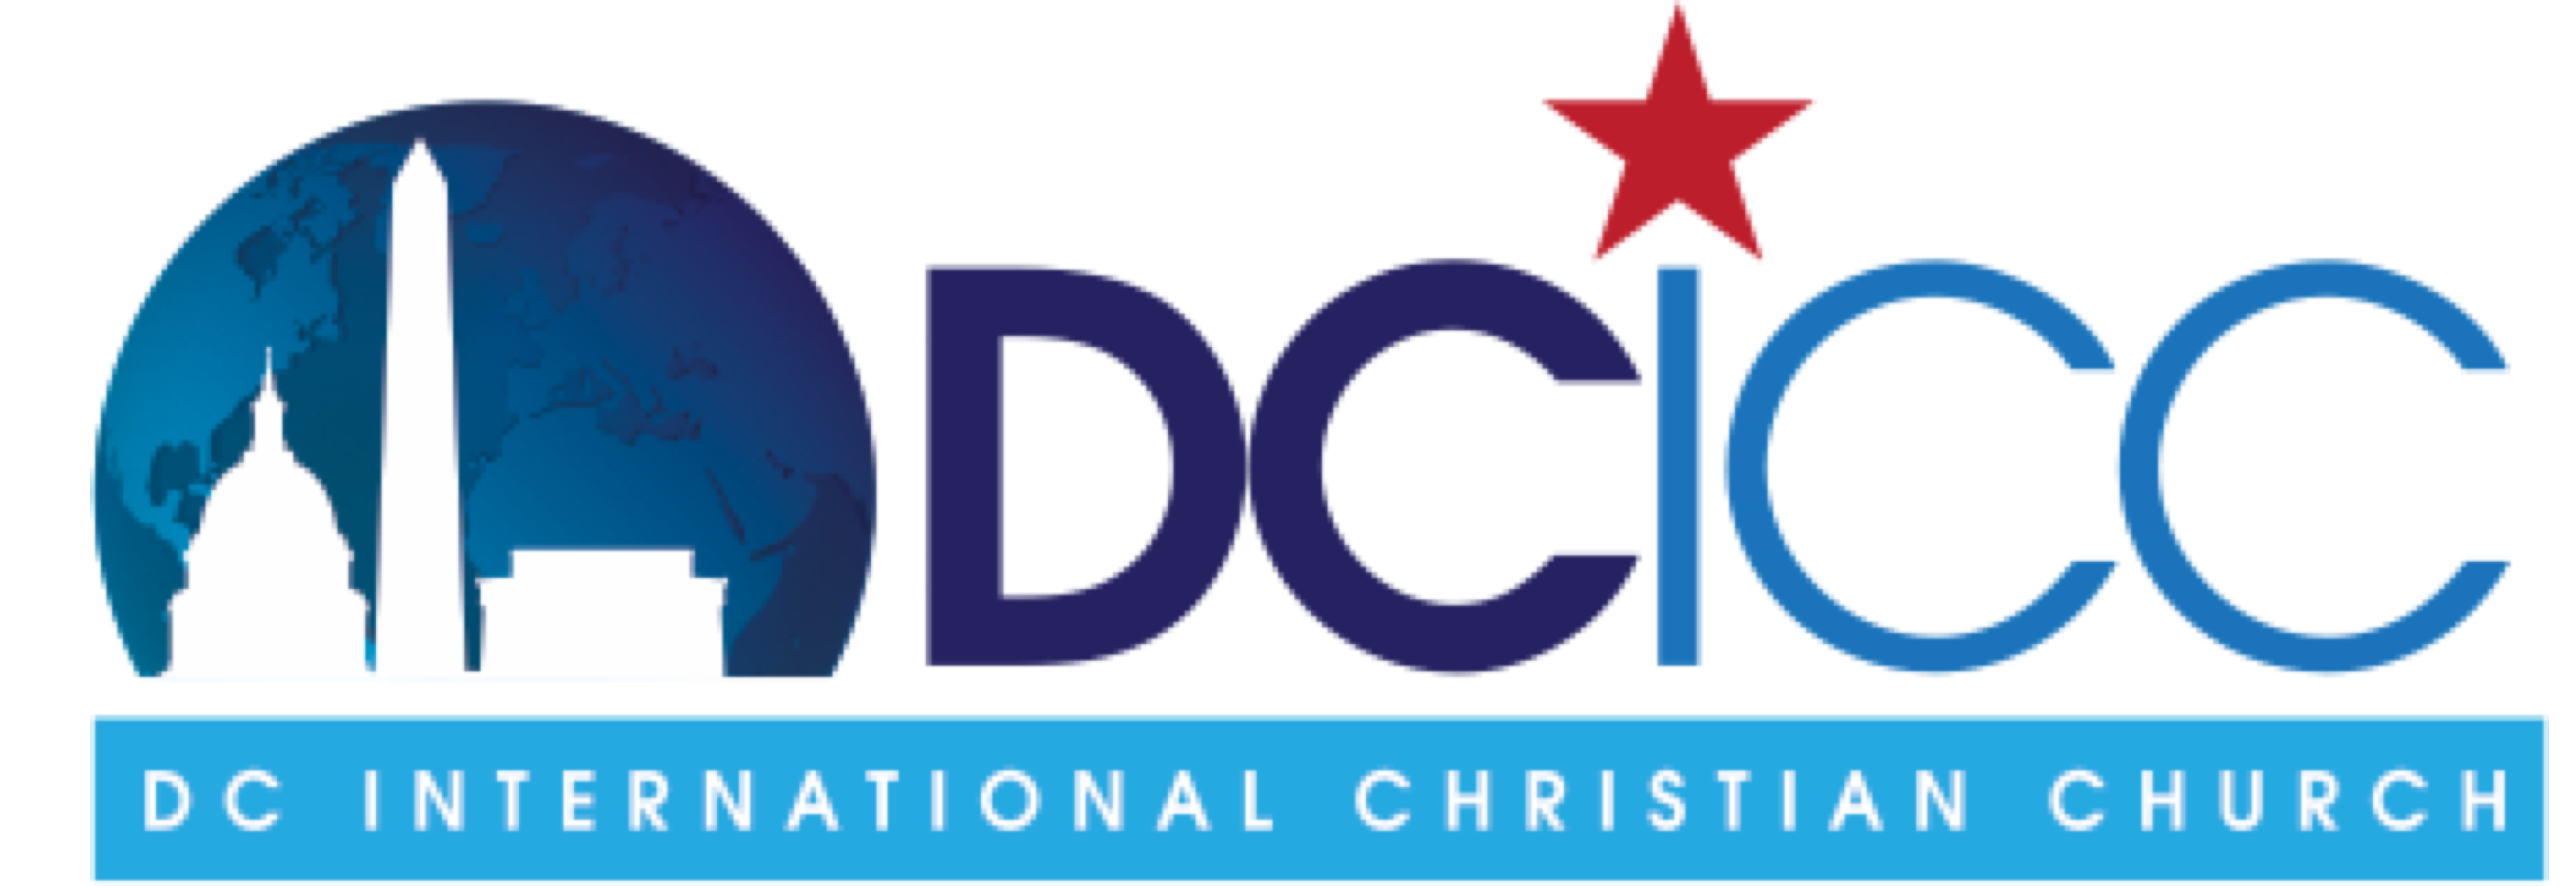 DC International Christian Church